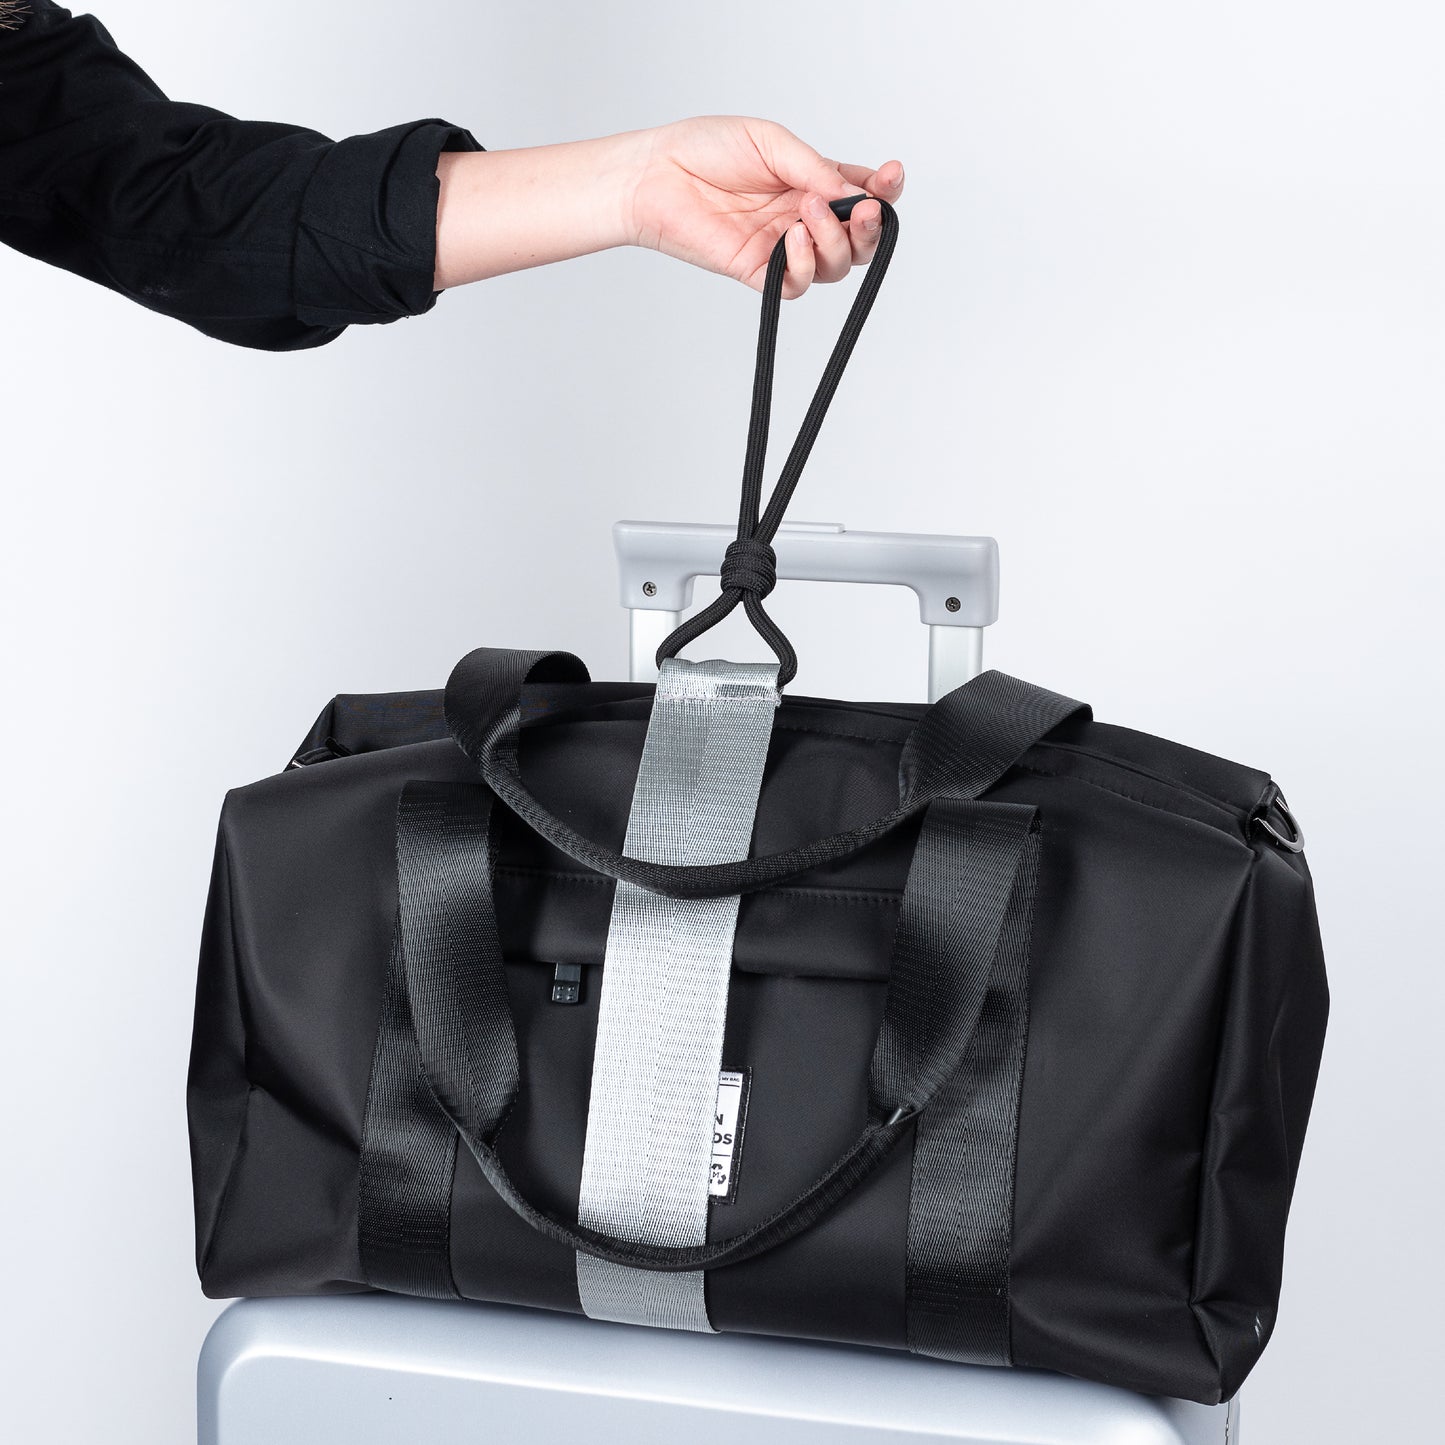 Multipurpose strap For Luggage Bag